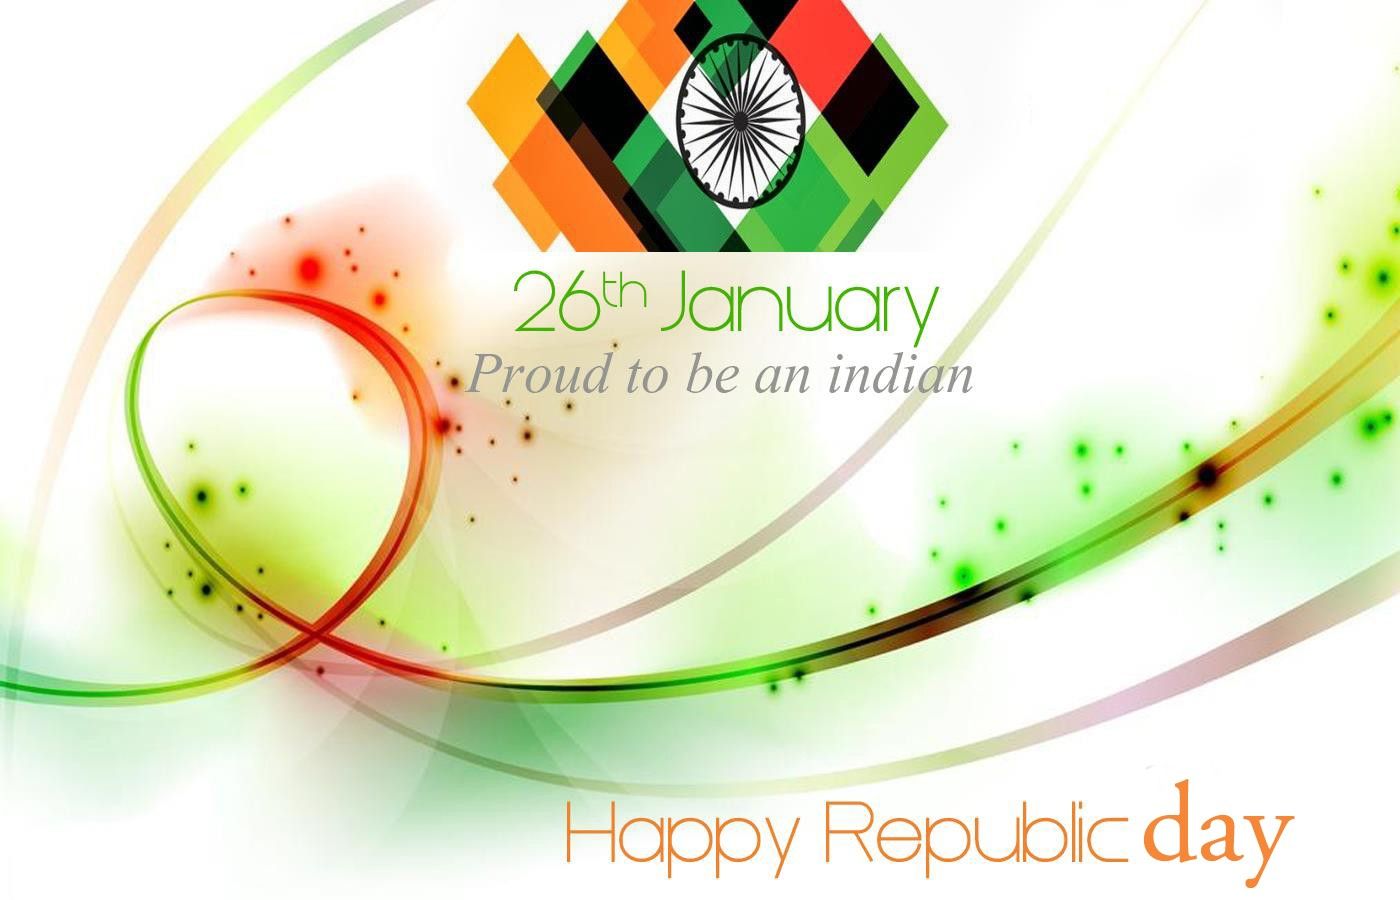 Republic Day Image 2021 Free Download Republic Day HD Wallpaper, Pics Eid Mubarak Image 2021